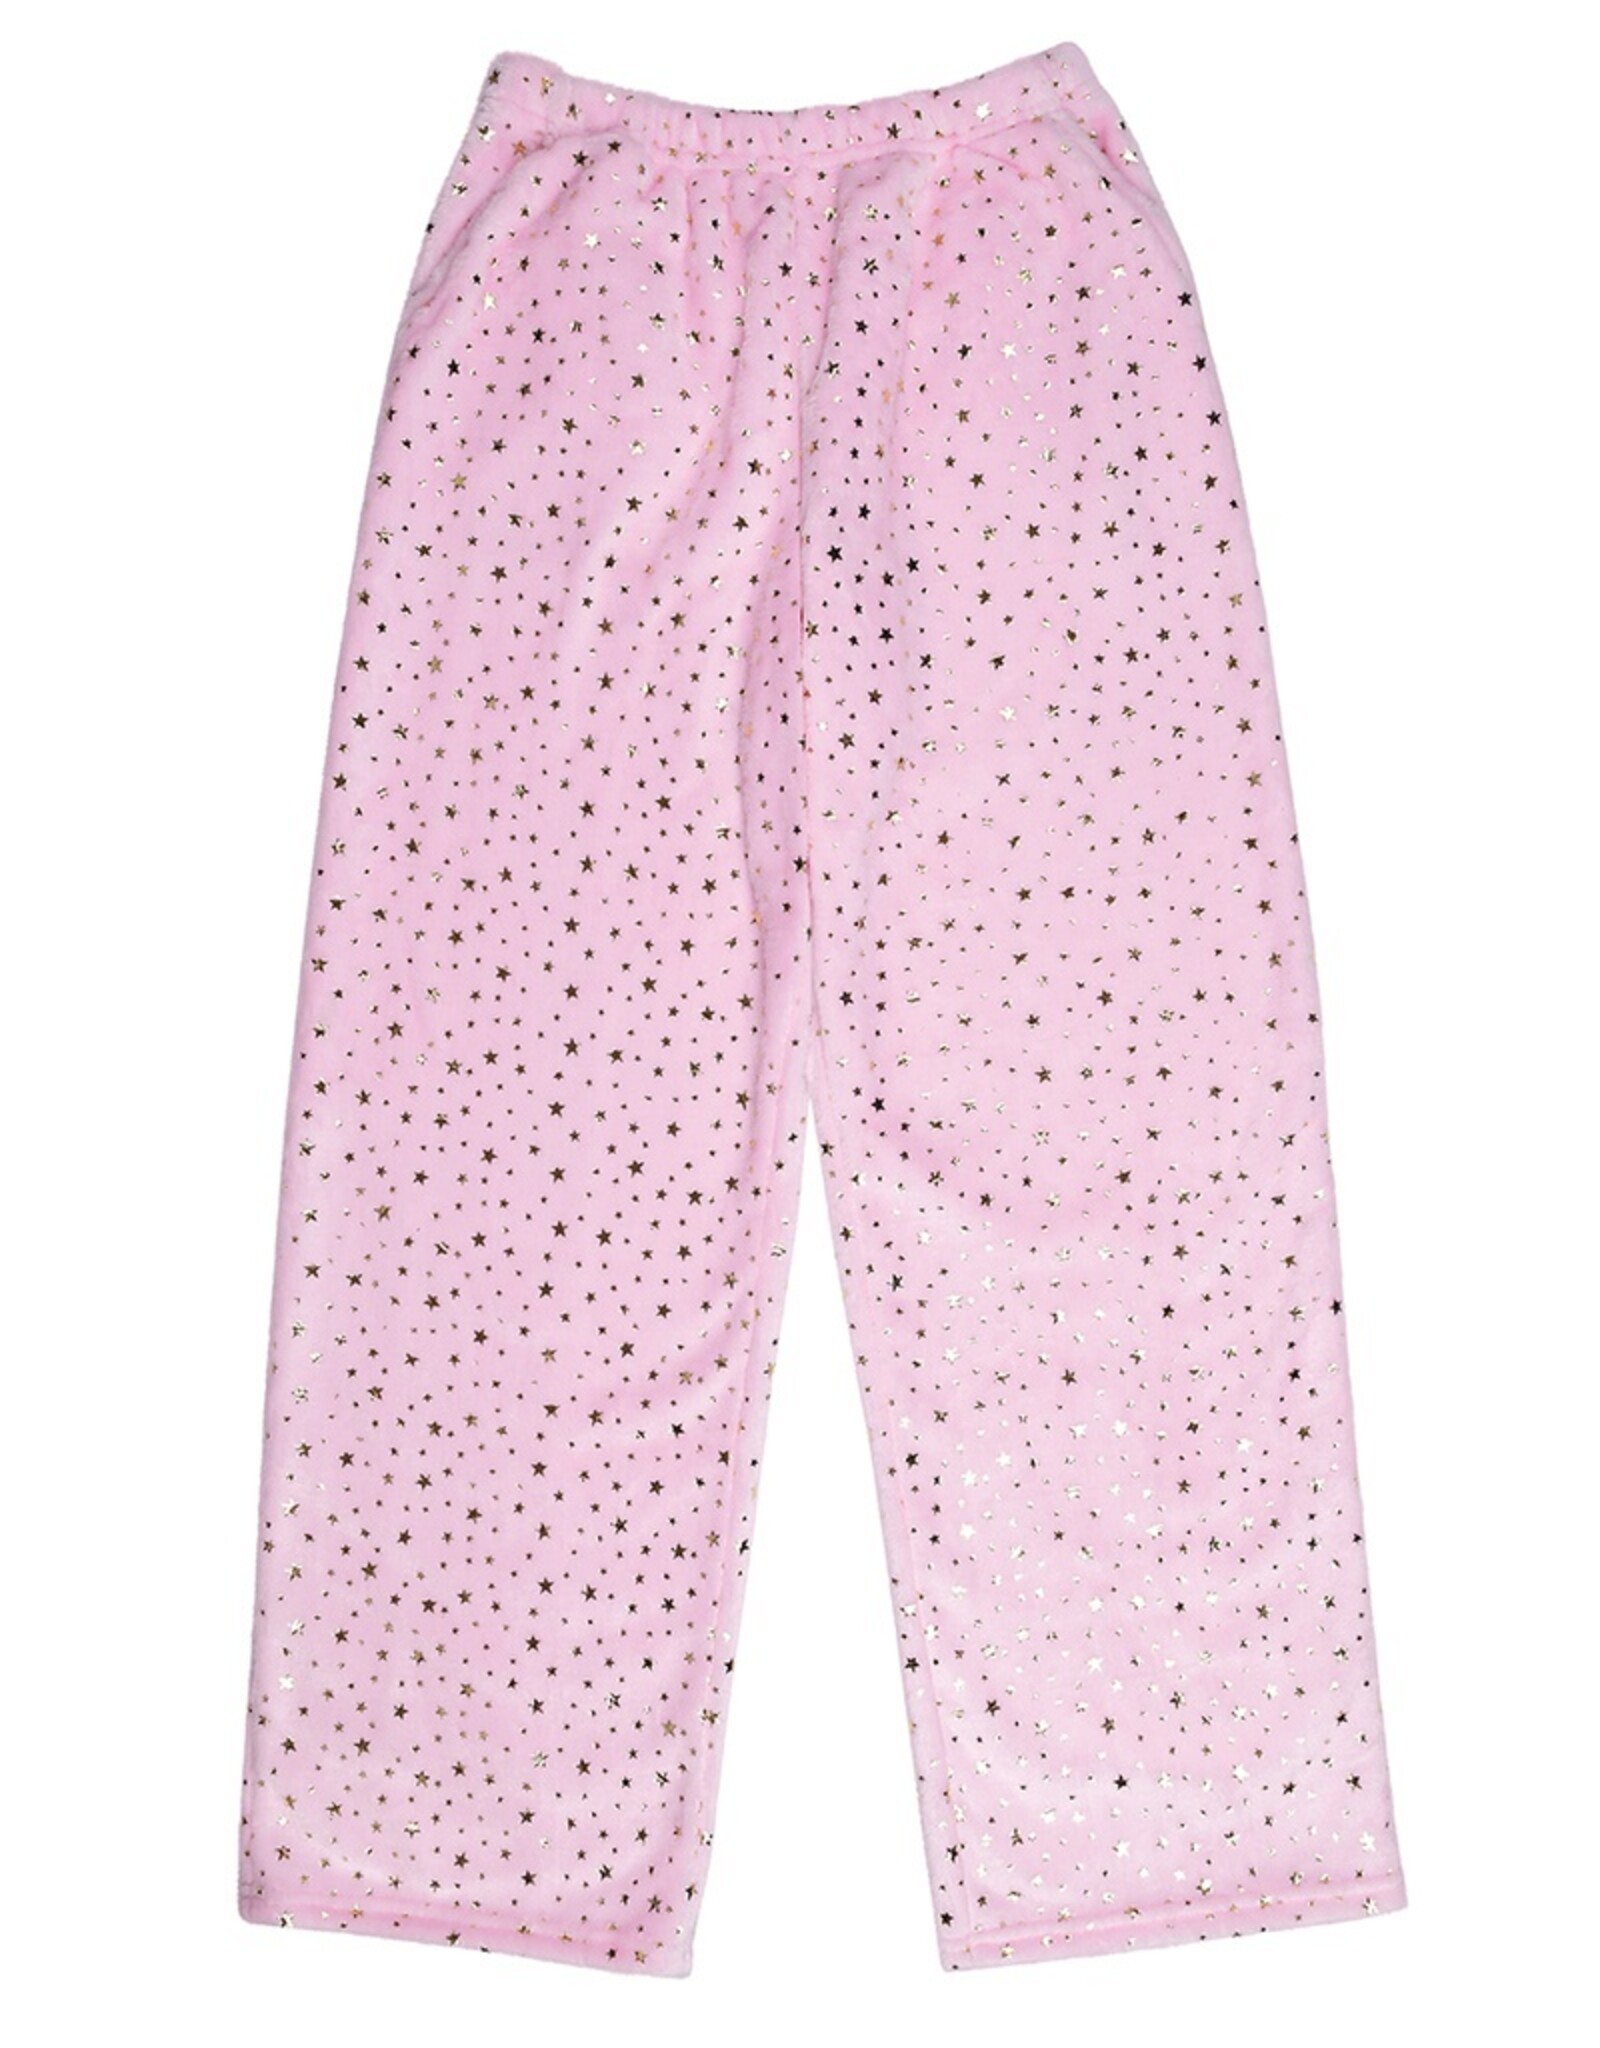 iScream Children's Plush Pants You're a Star